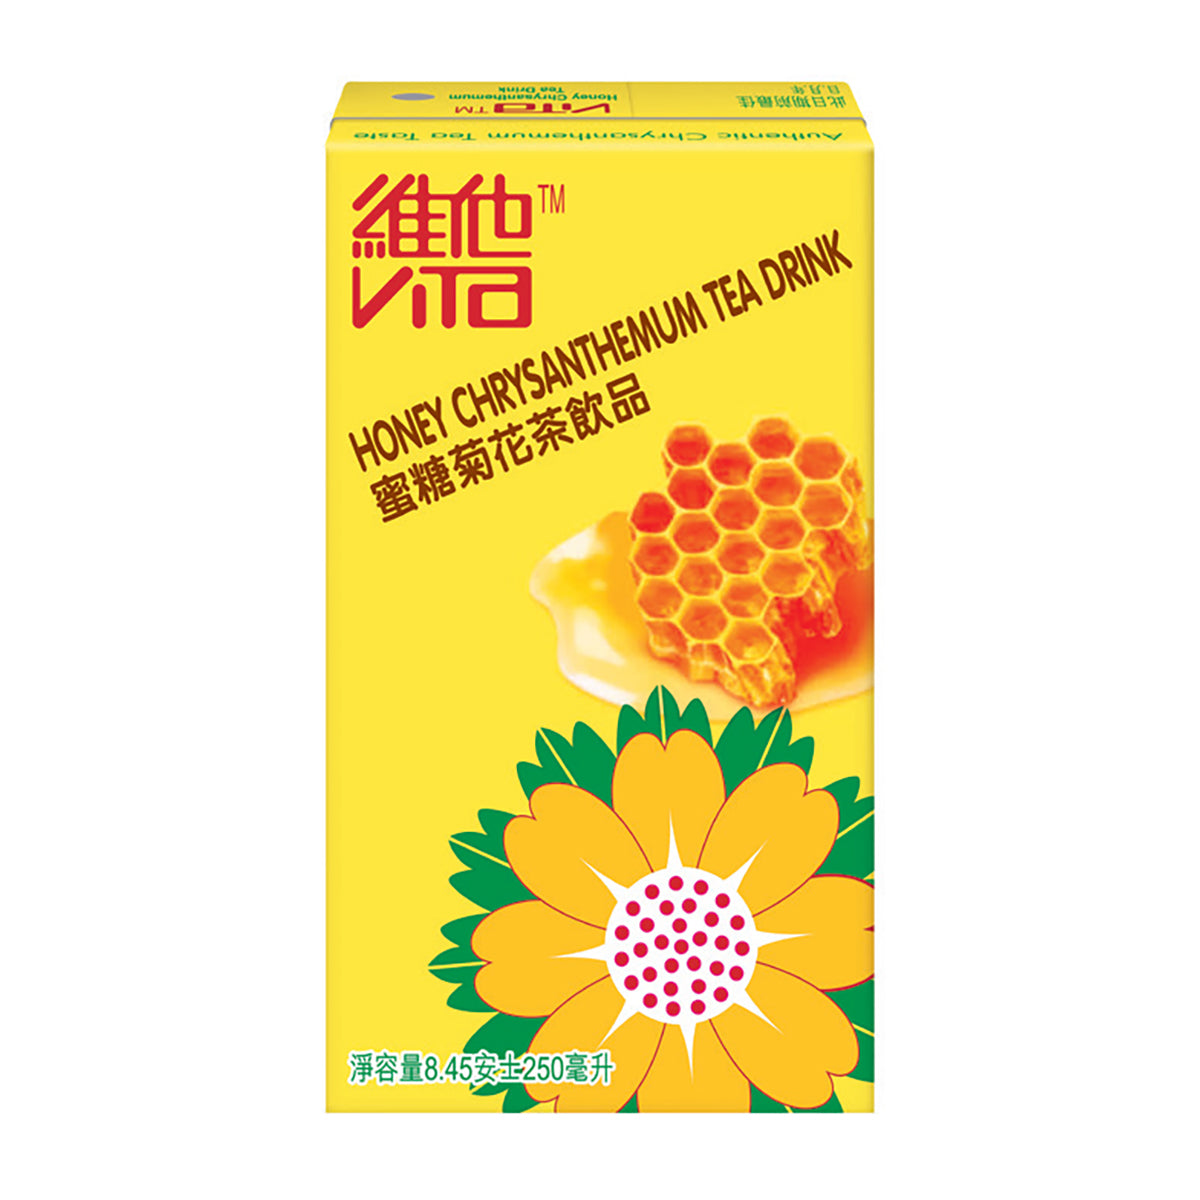 vita honey chrysanthemum tea 250ml - 6pk